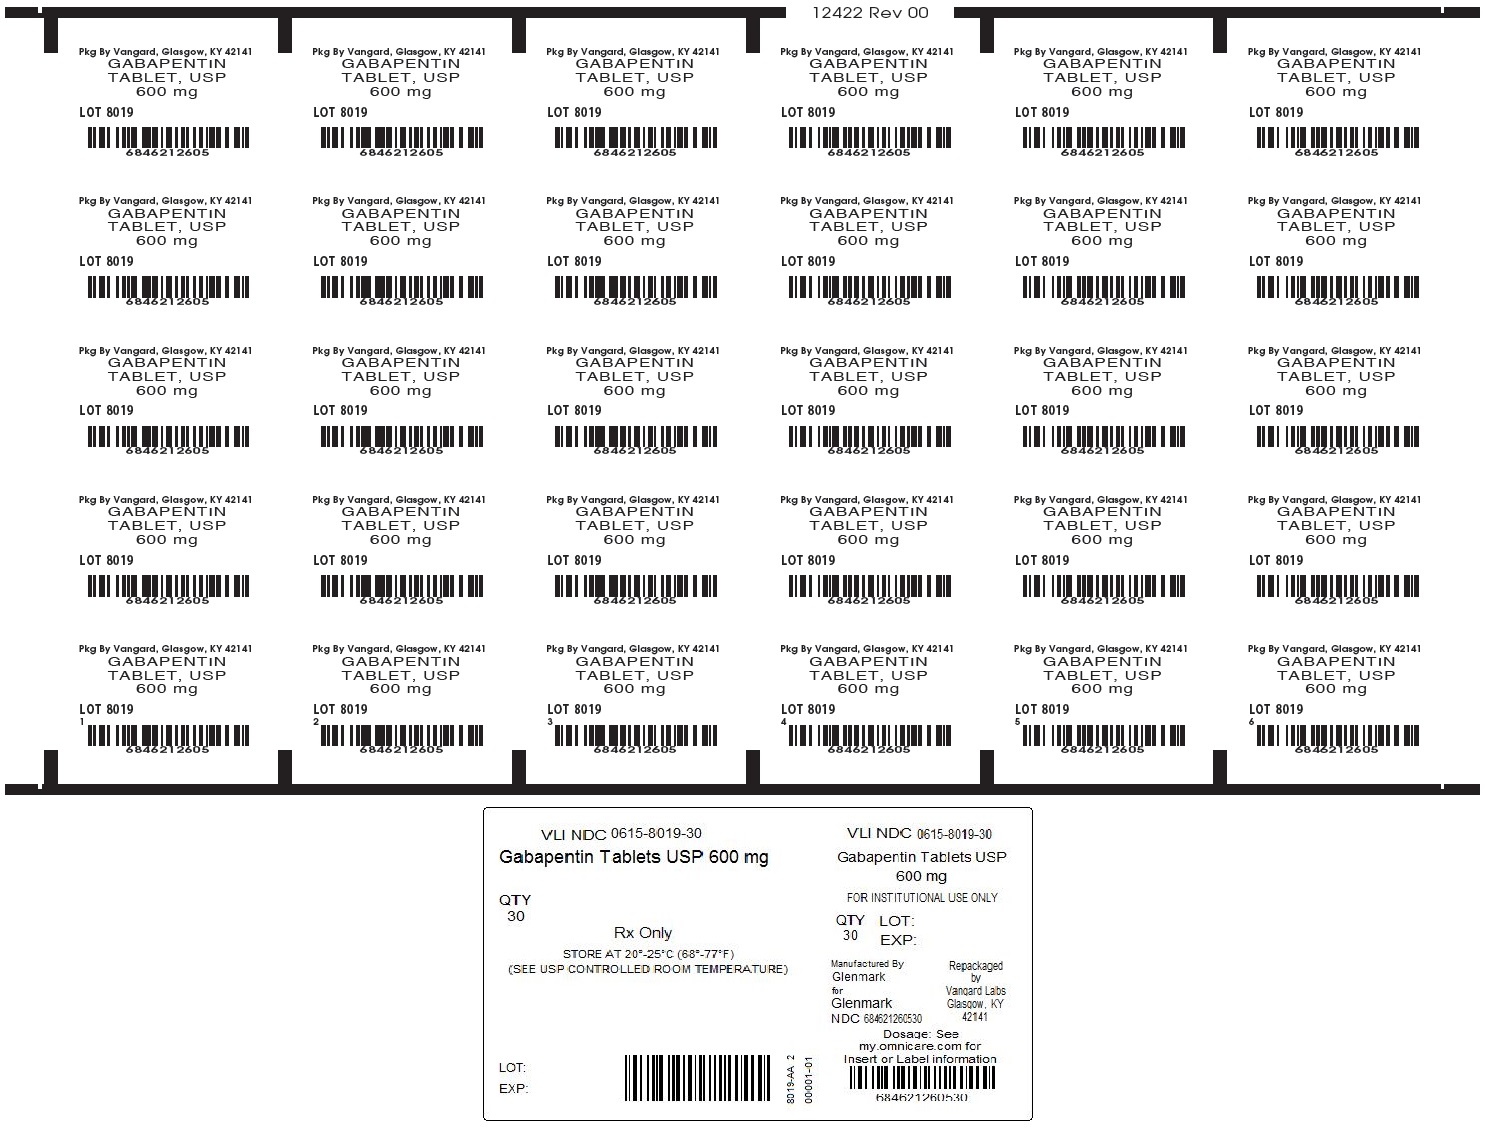 Gabapentin Tabs 600mg unit dose label